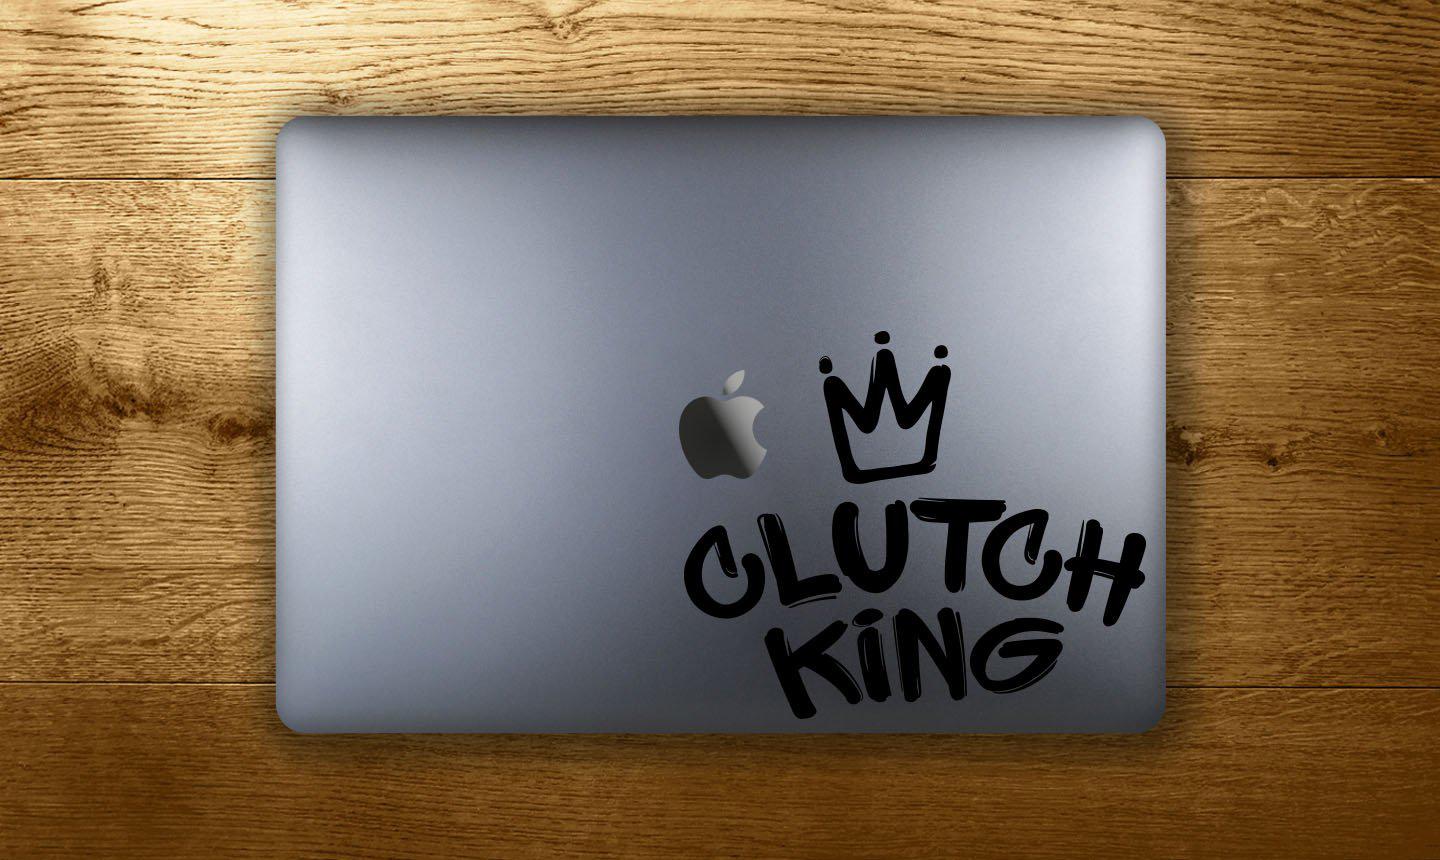 Clutch King - make it stick